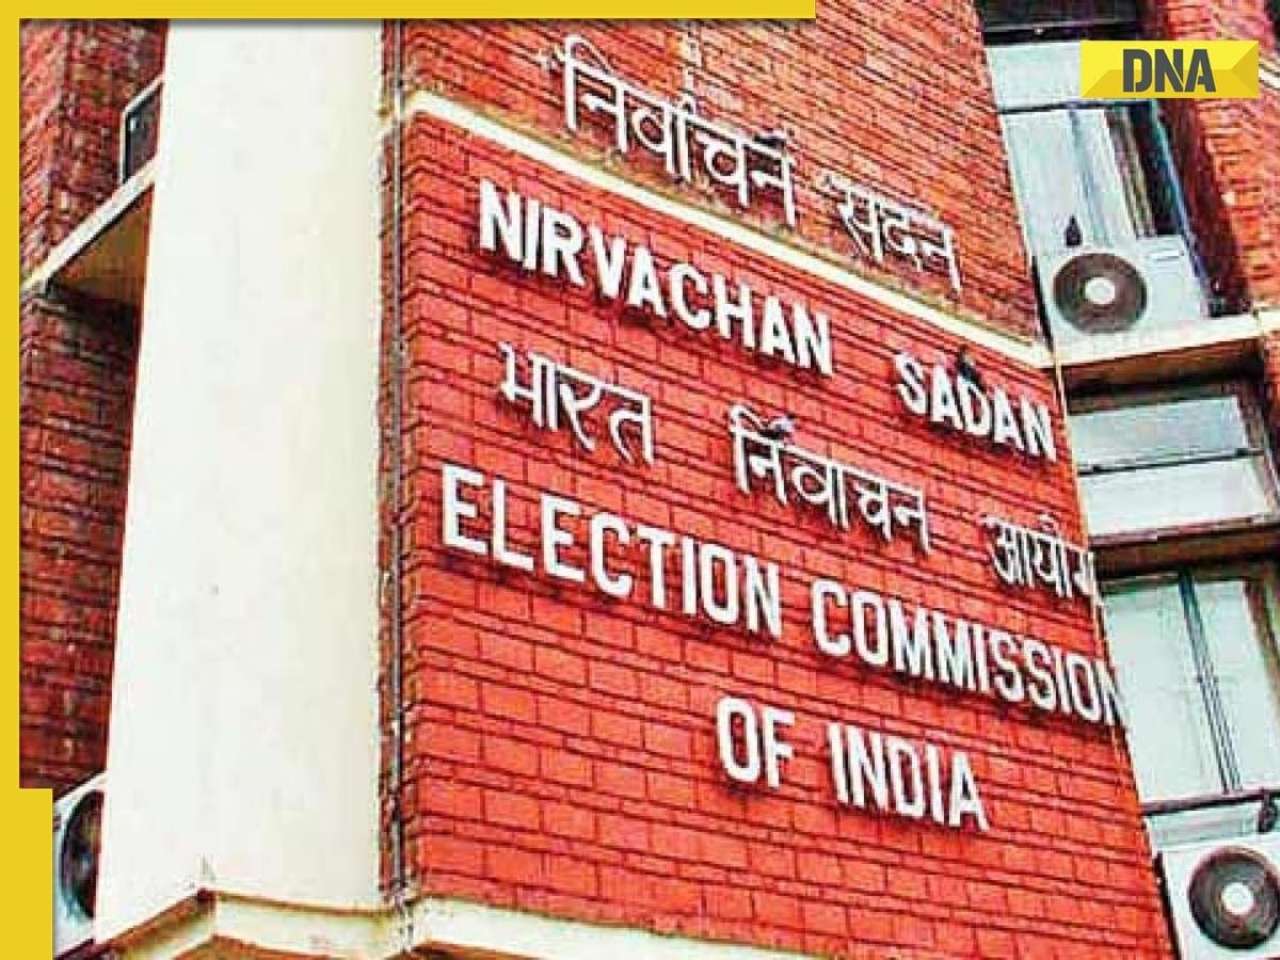 Former bureaucrats Sukhbir Singh Sandhu, Gyanesh Kumar named new election commissioners